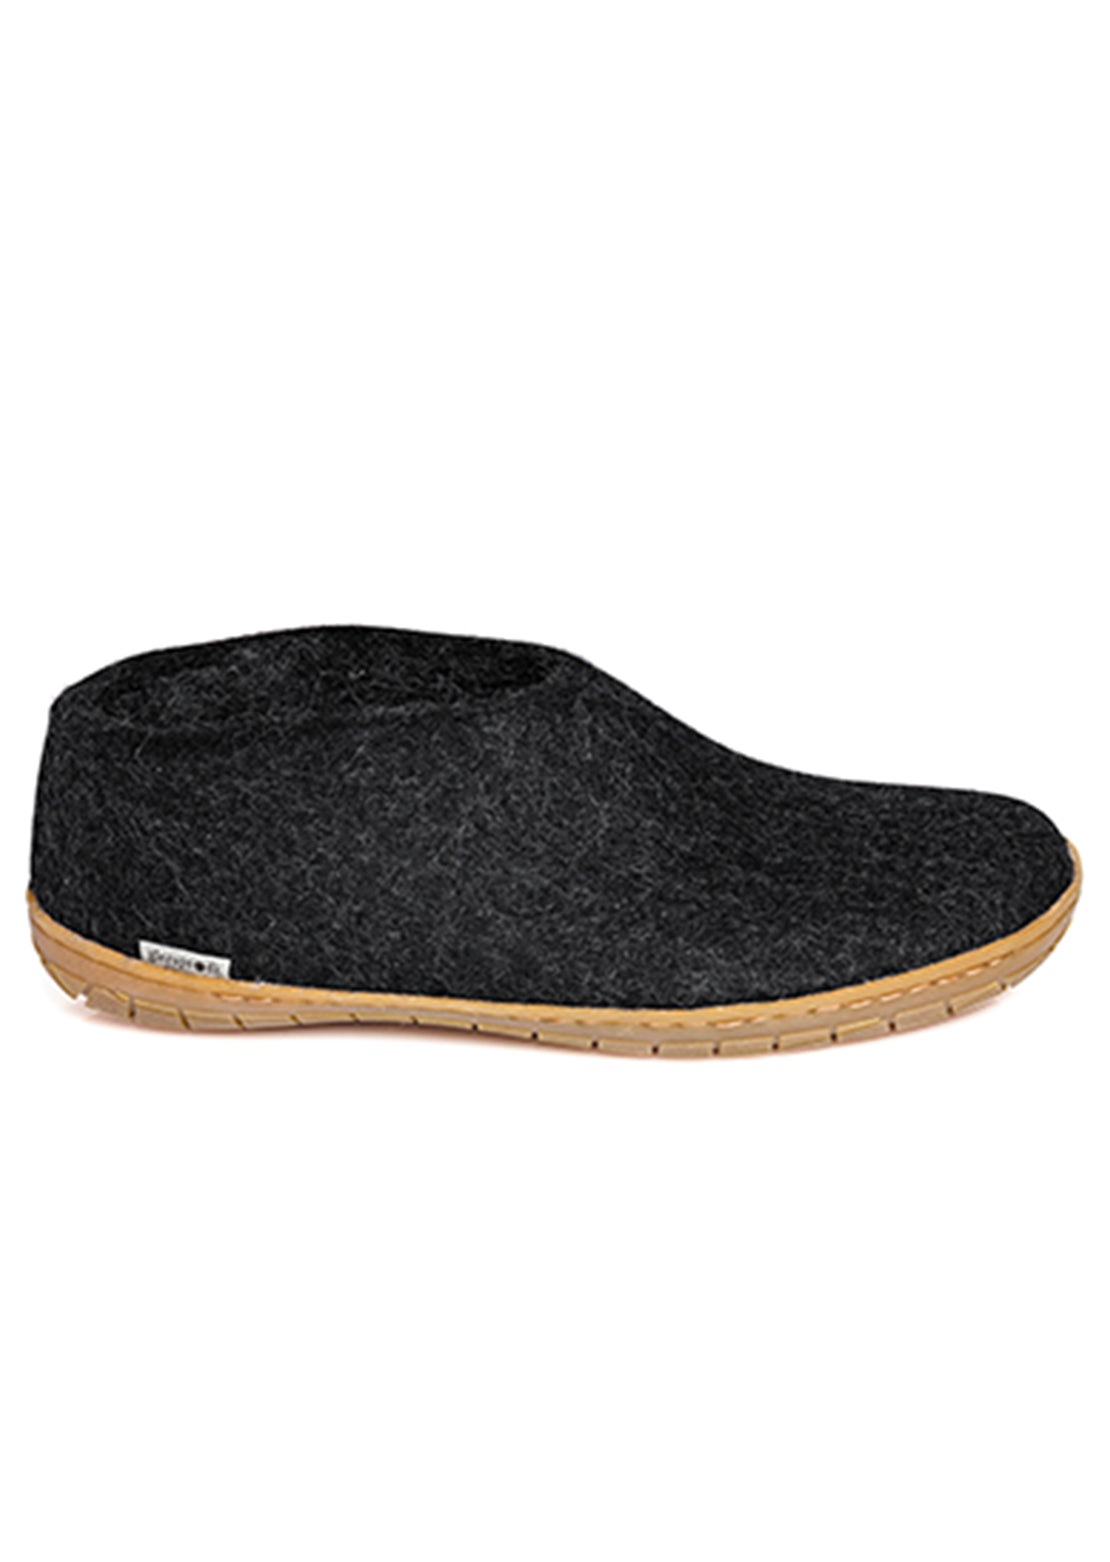 Glerups Unisex Natural Rubber Slipper Shoes Black